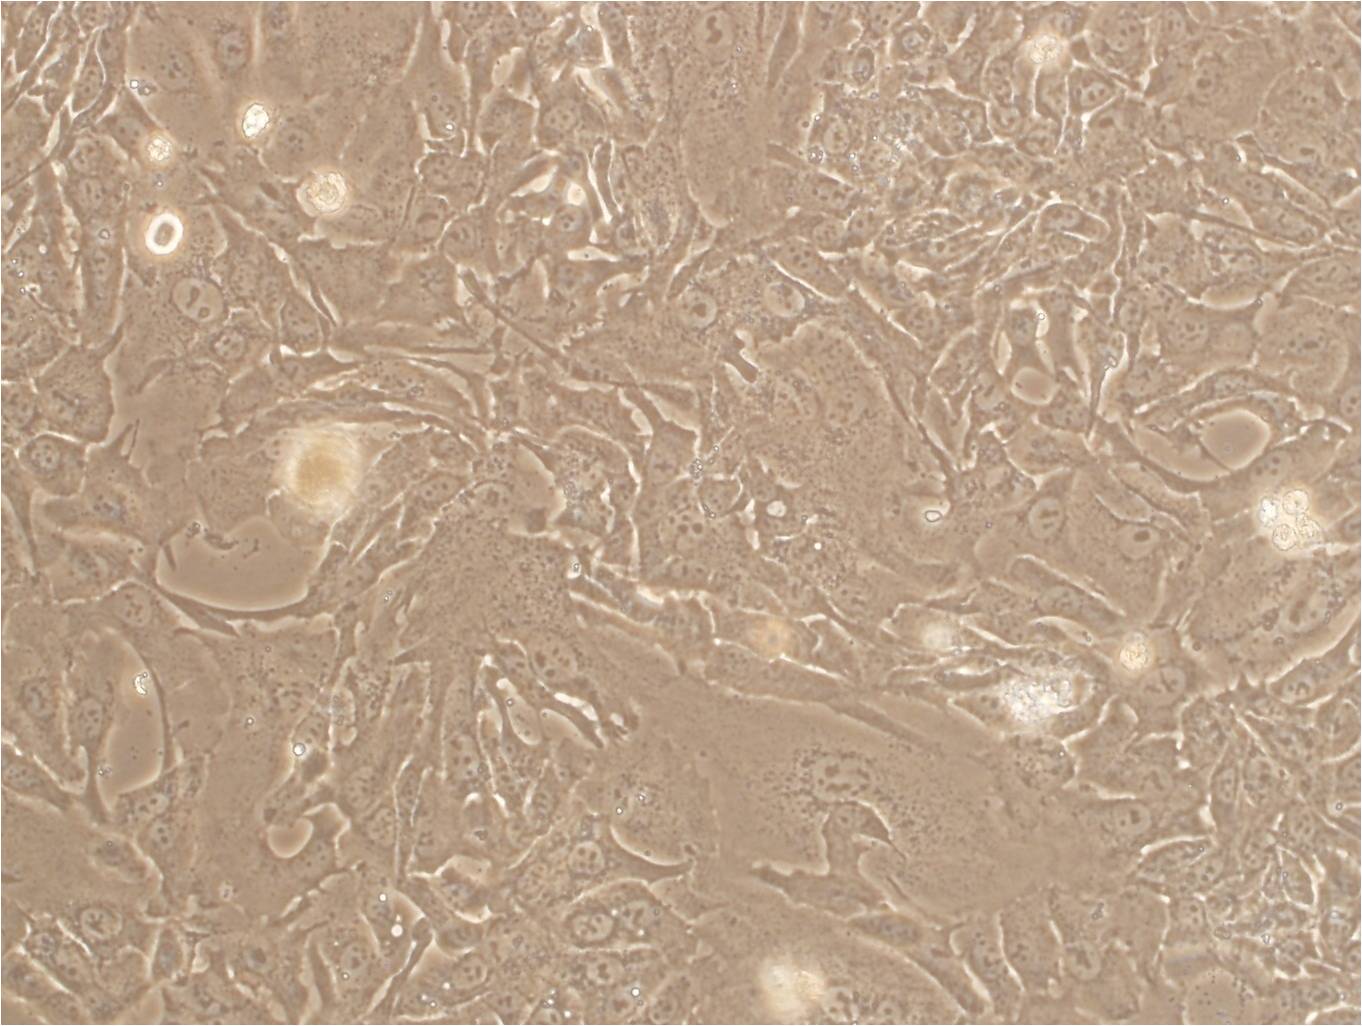 GC-2spd(ts) cell line小鼠精母细胞系